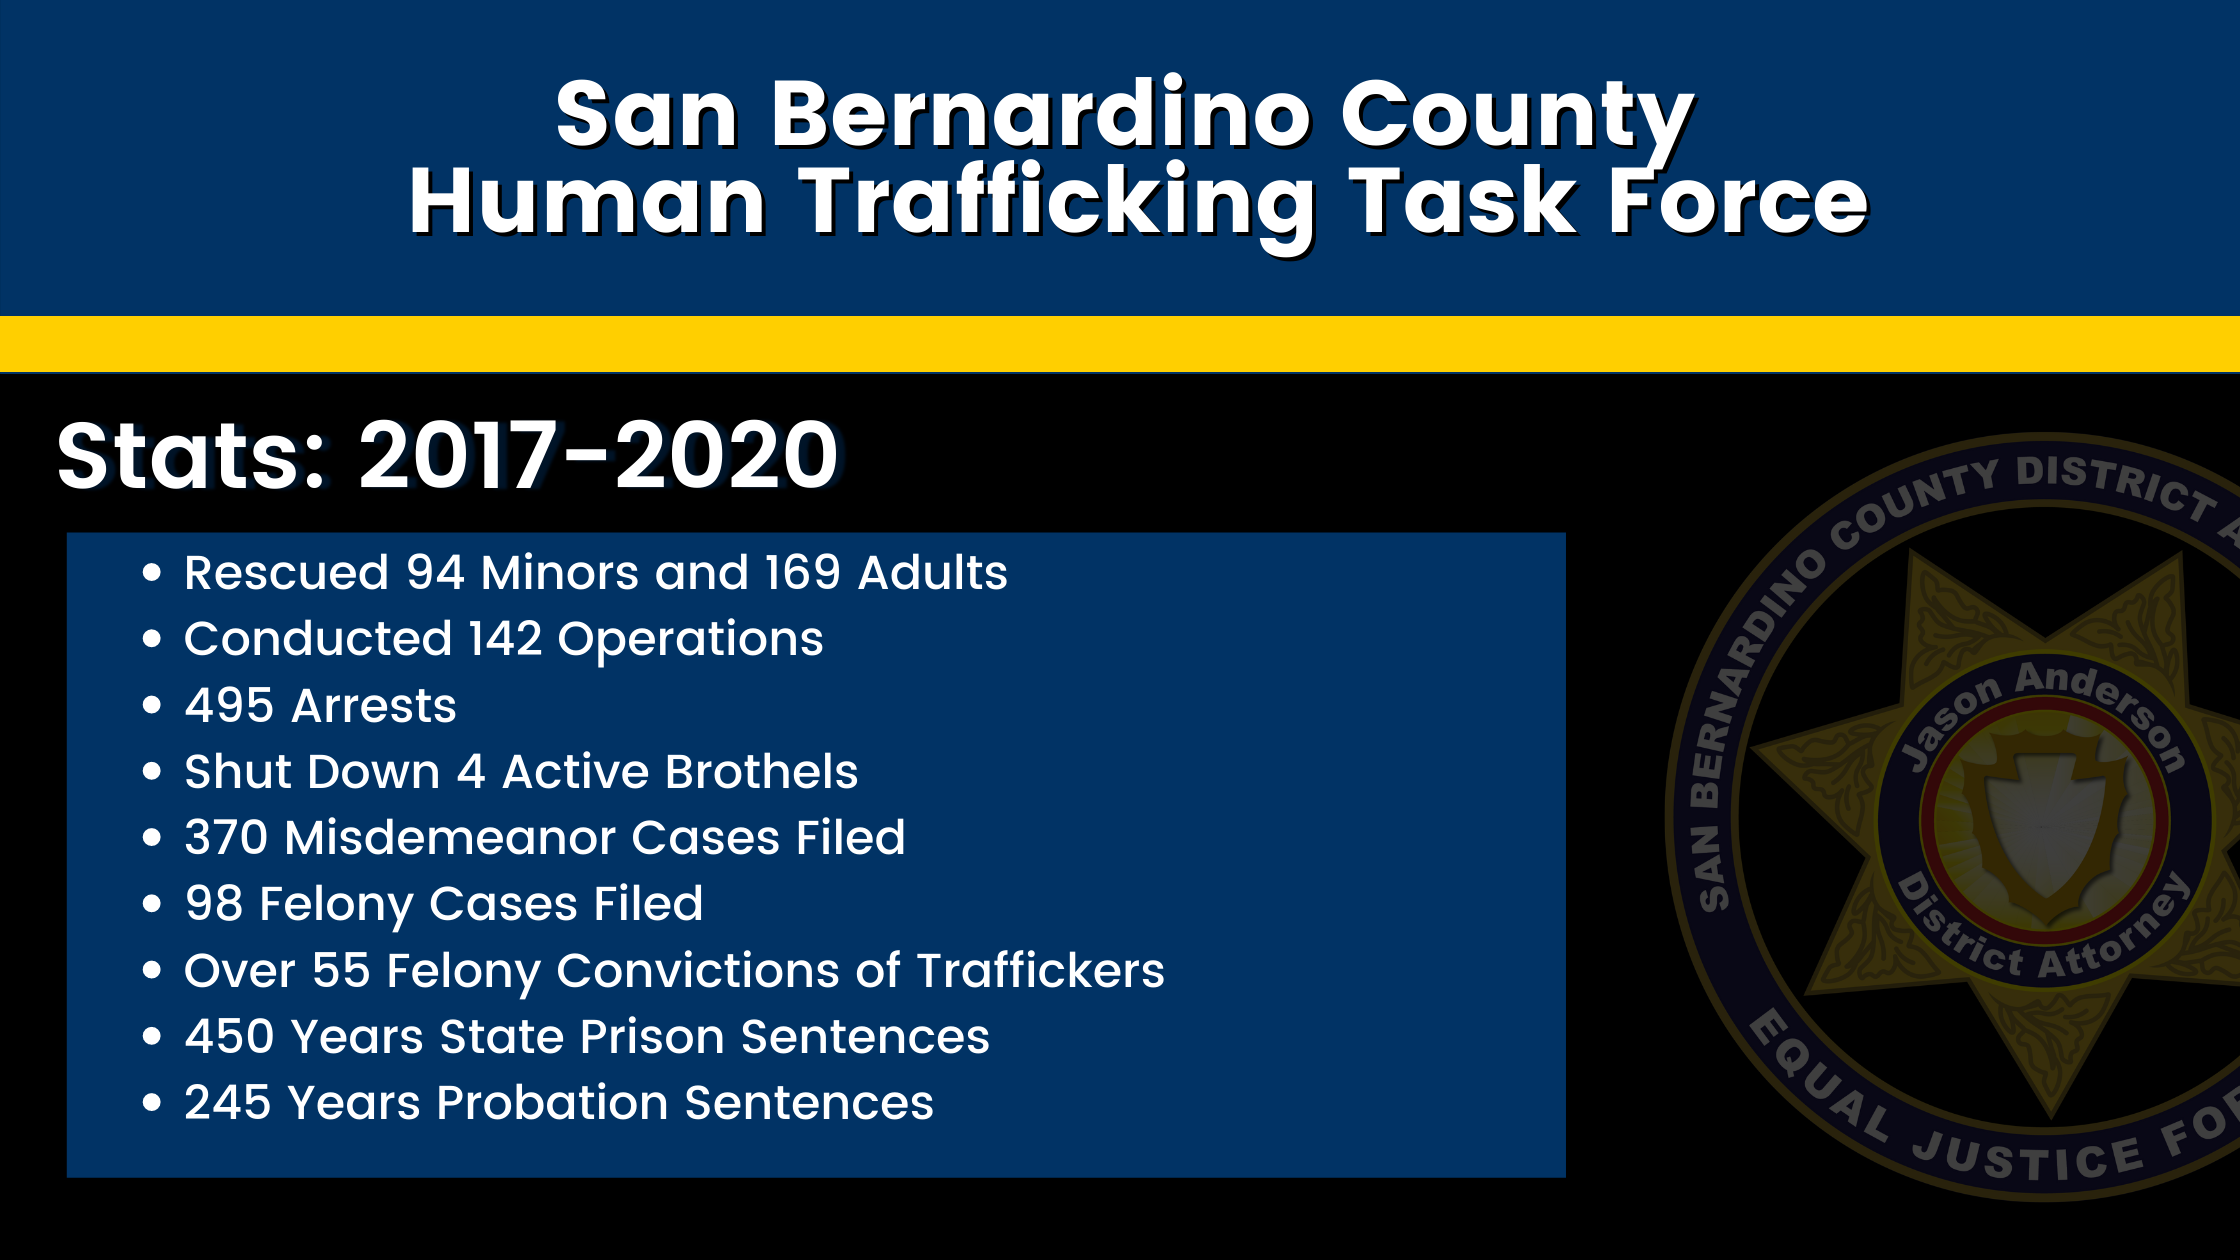 Human Trafficking Task Force statistics